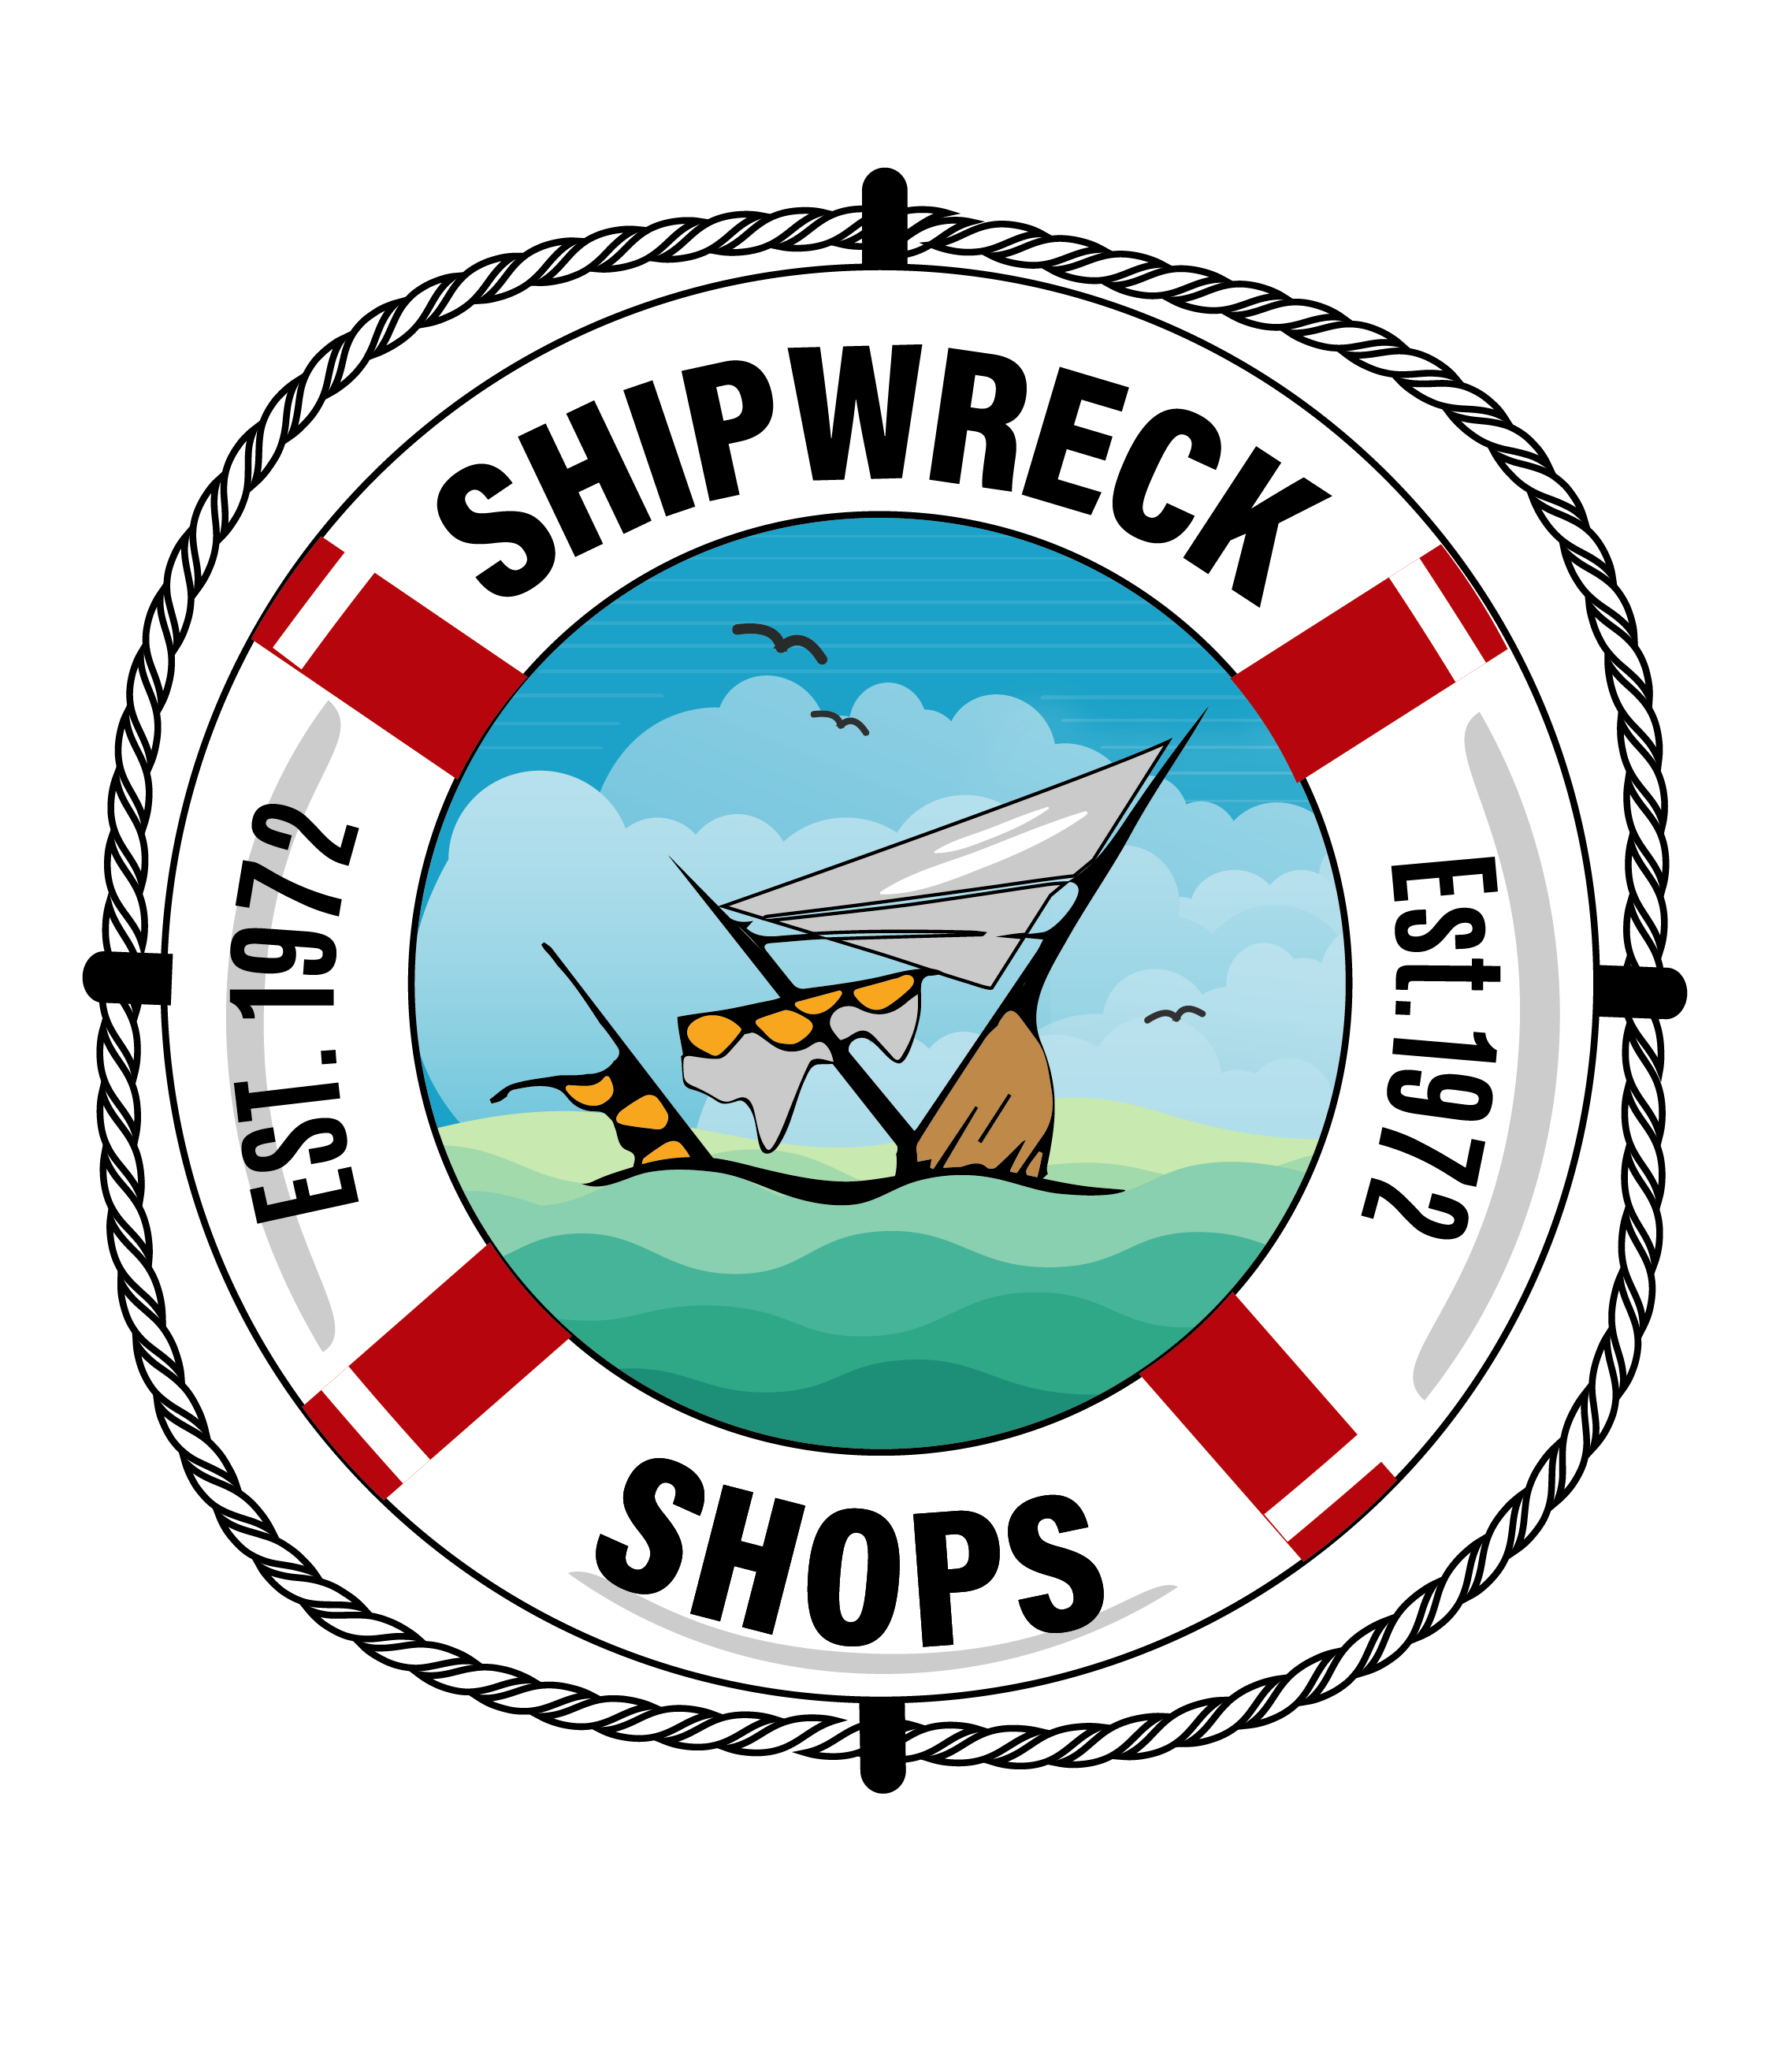 SHIPWRECK SHOPS